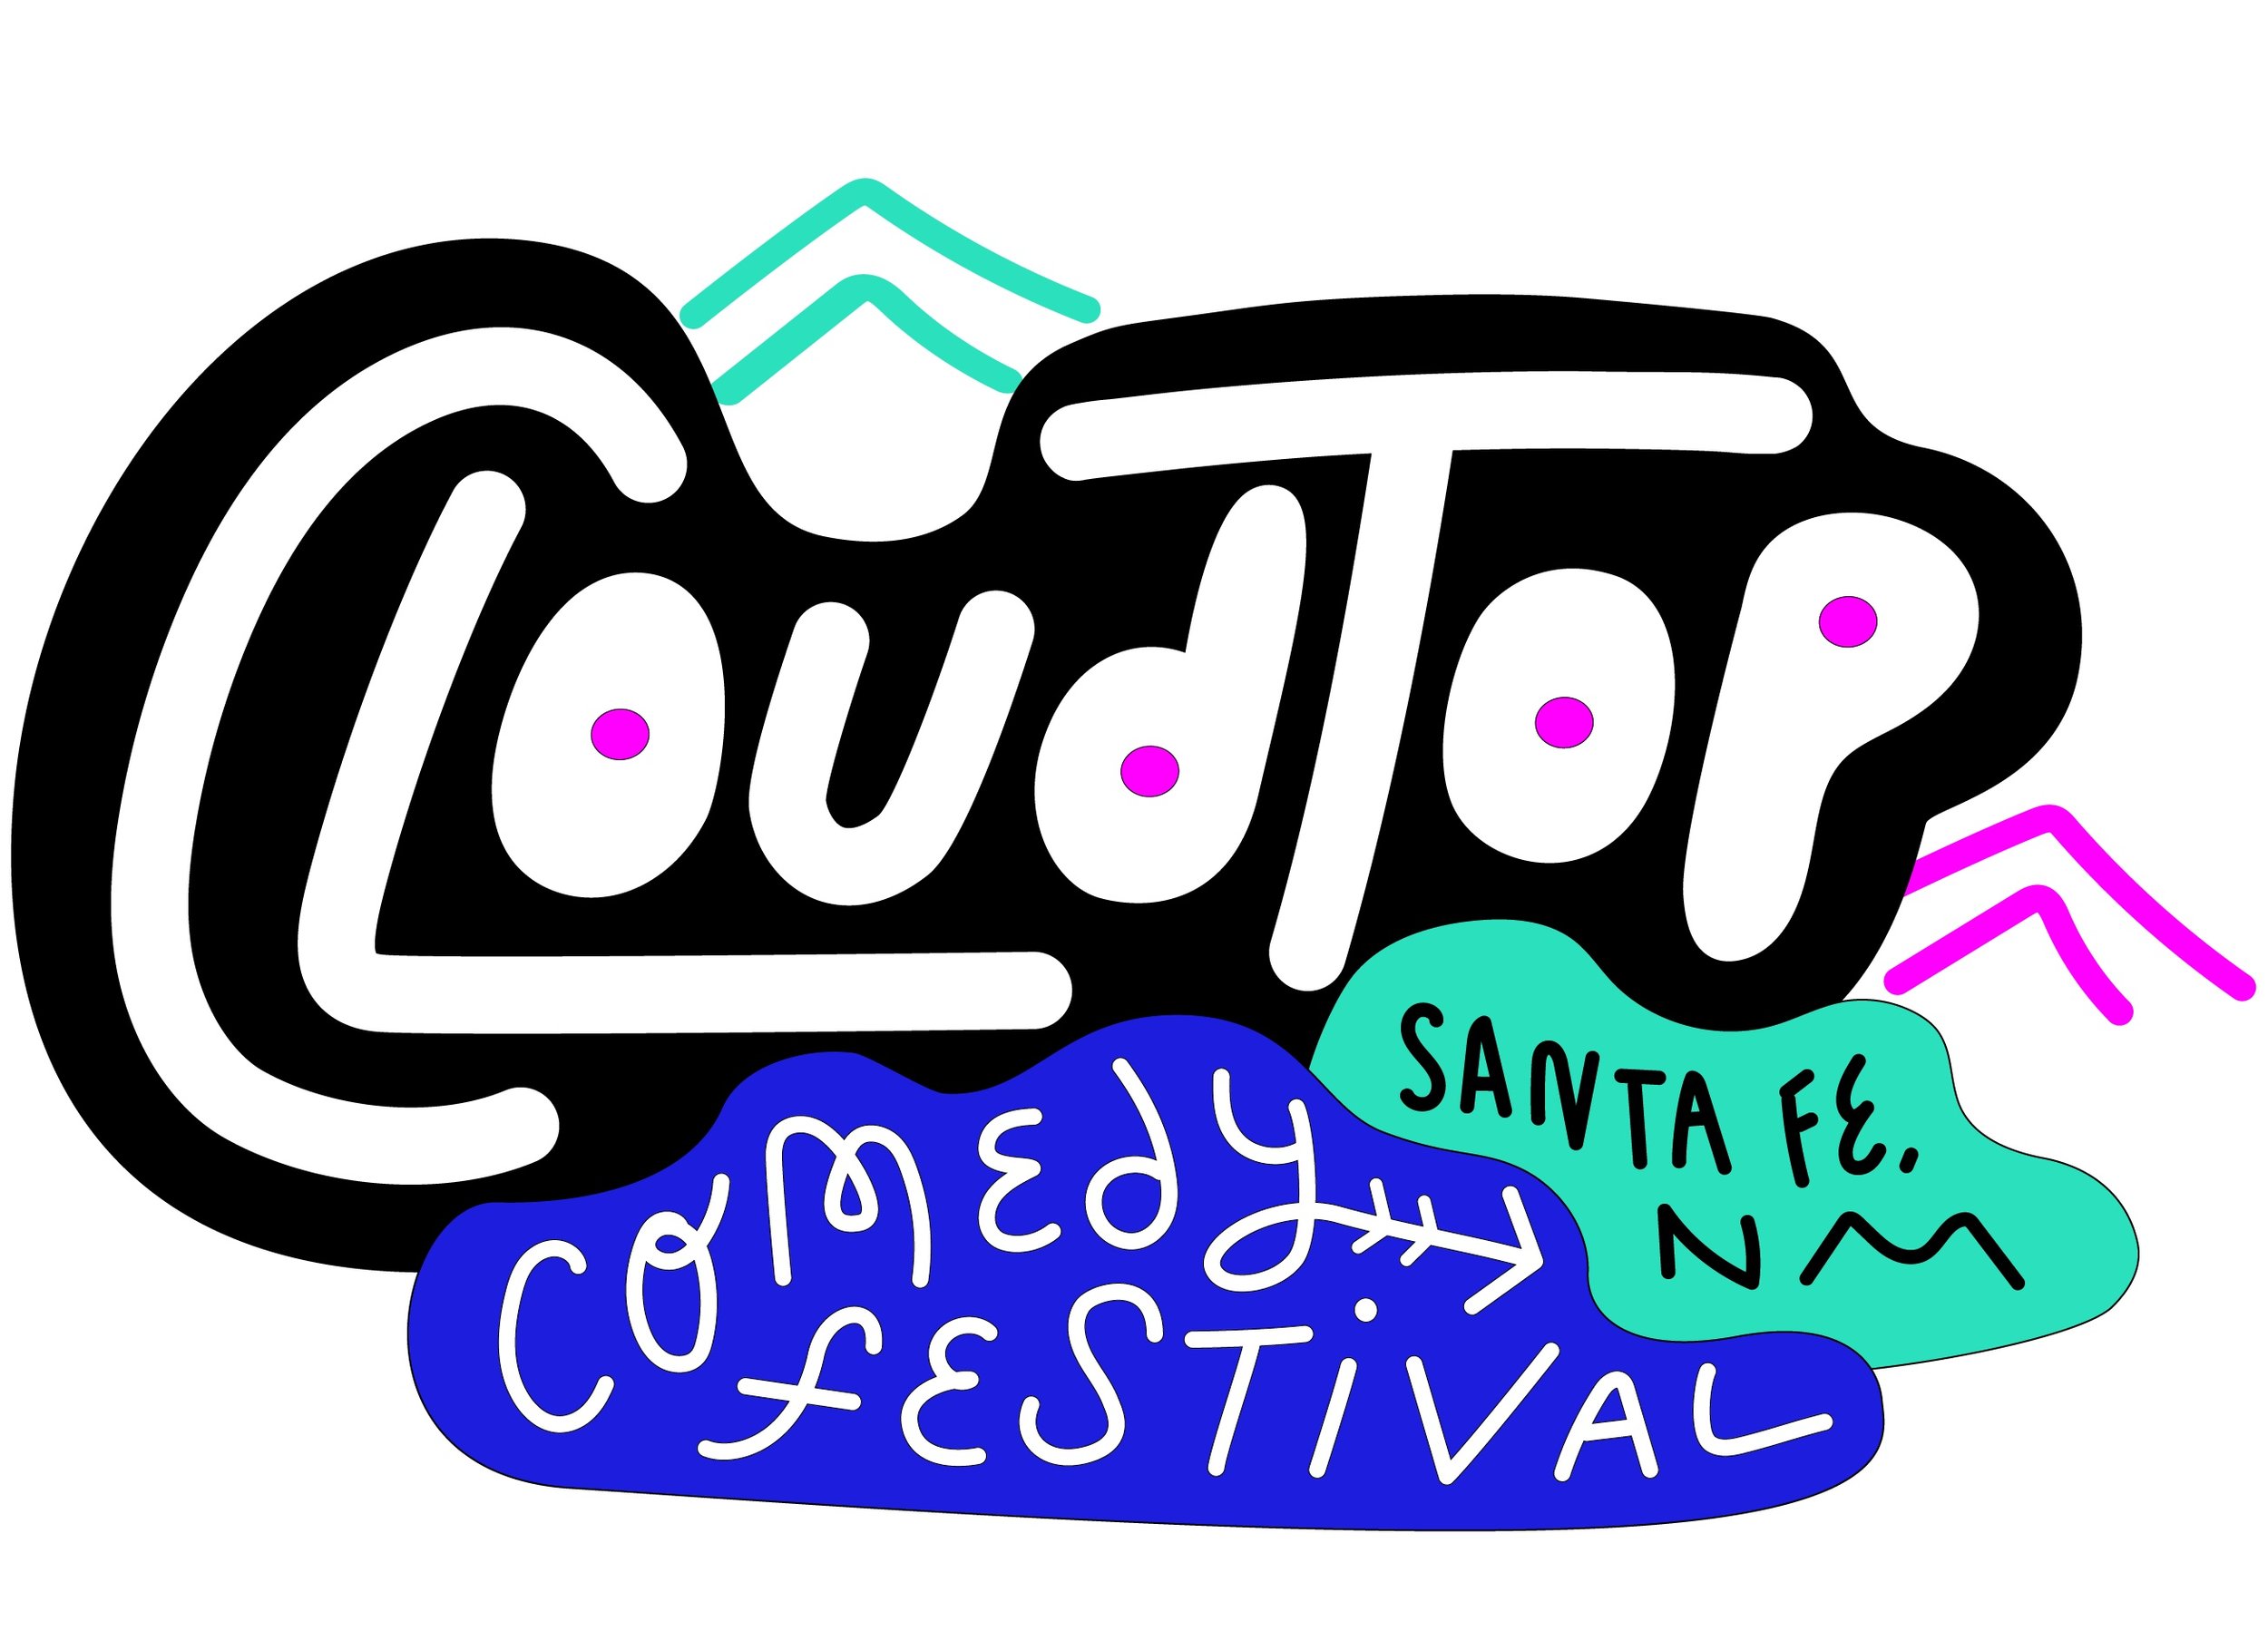 CloudTop Comedy Festival